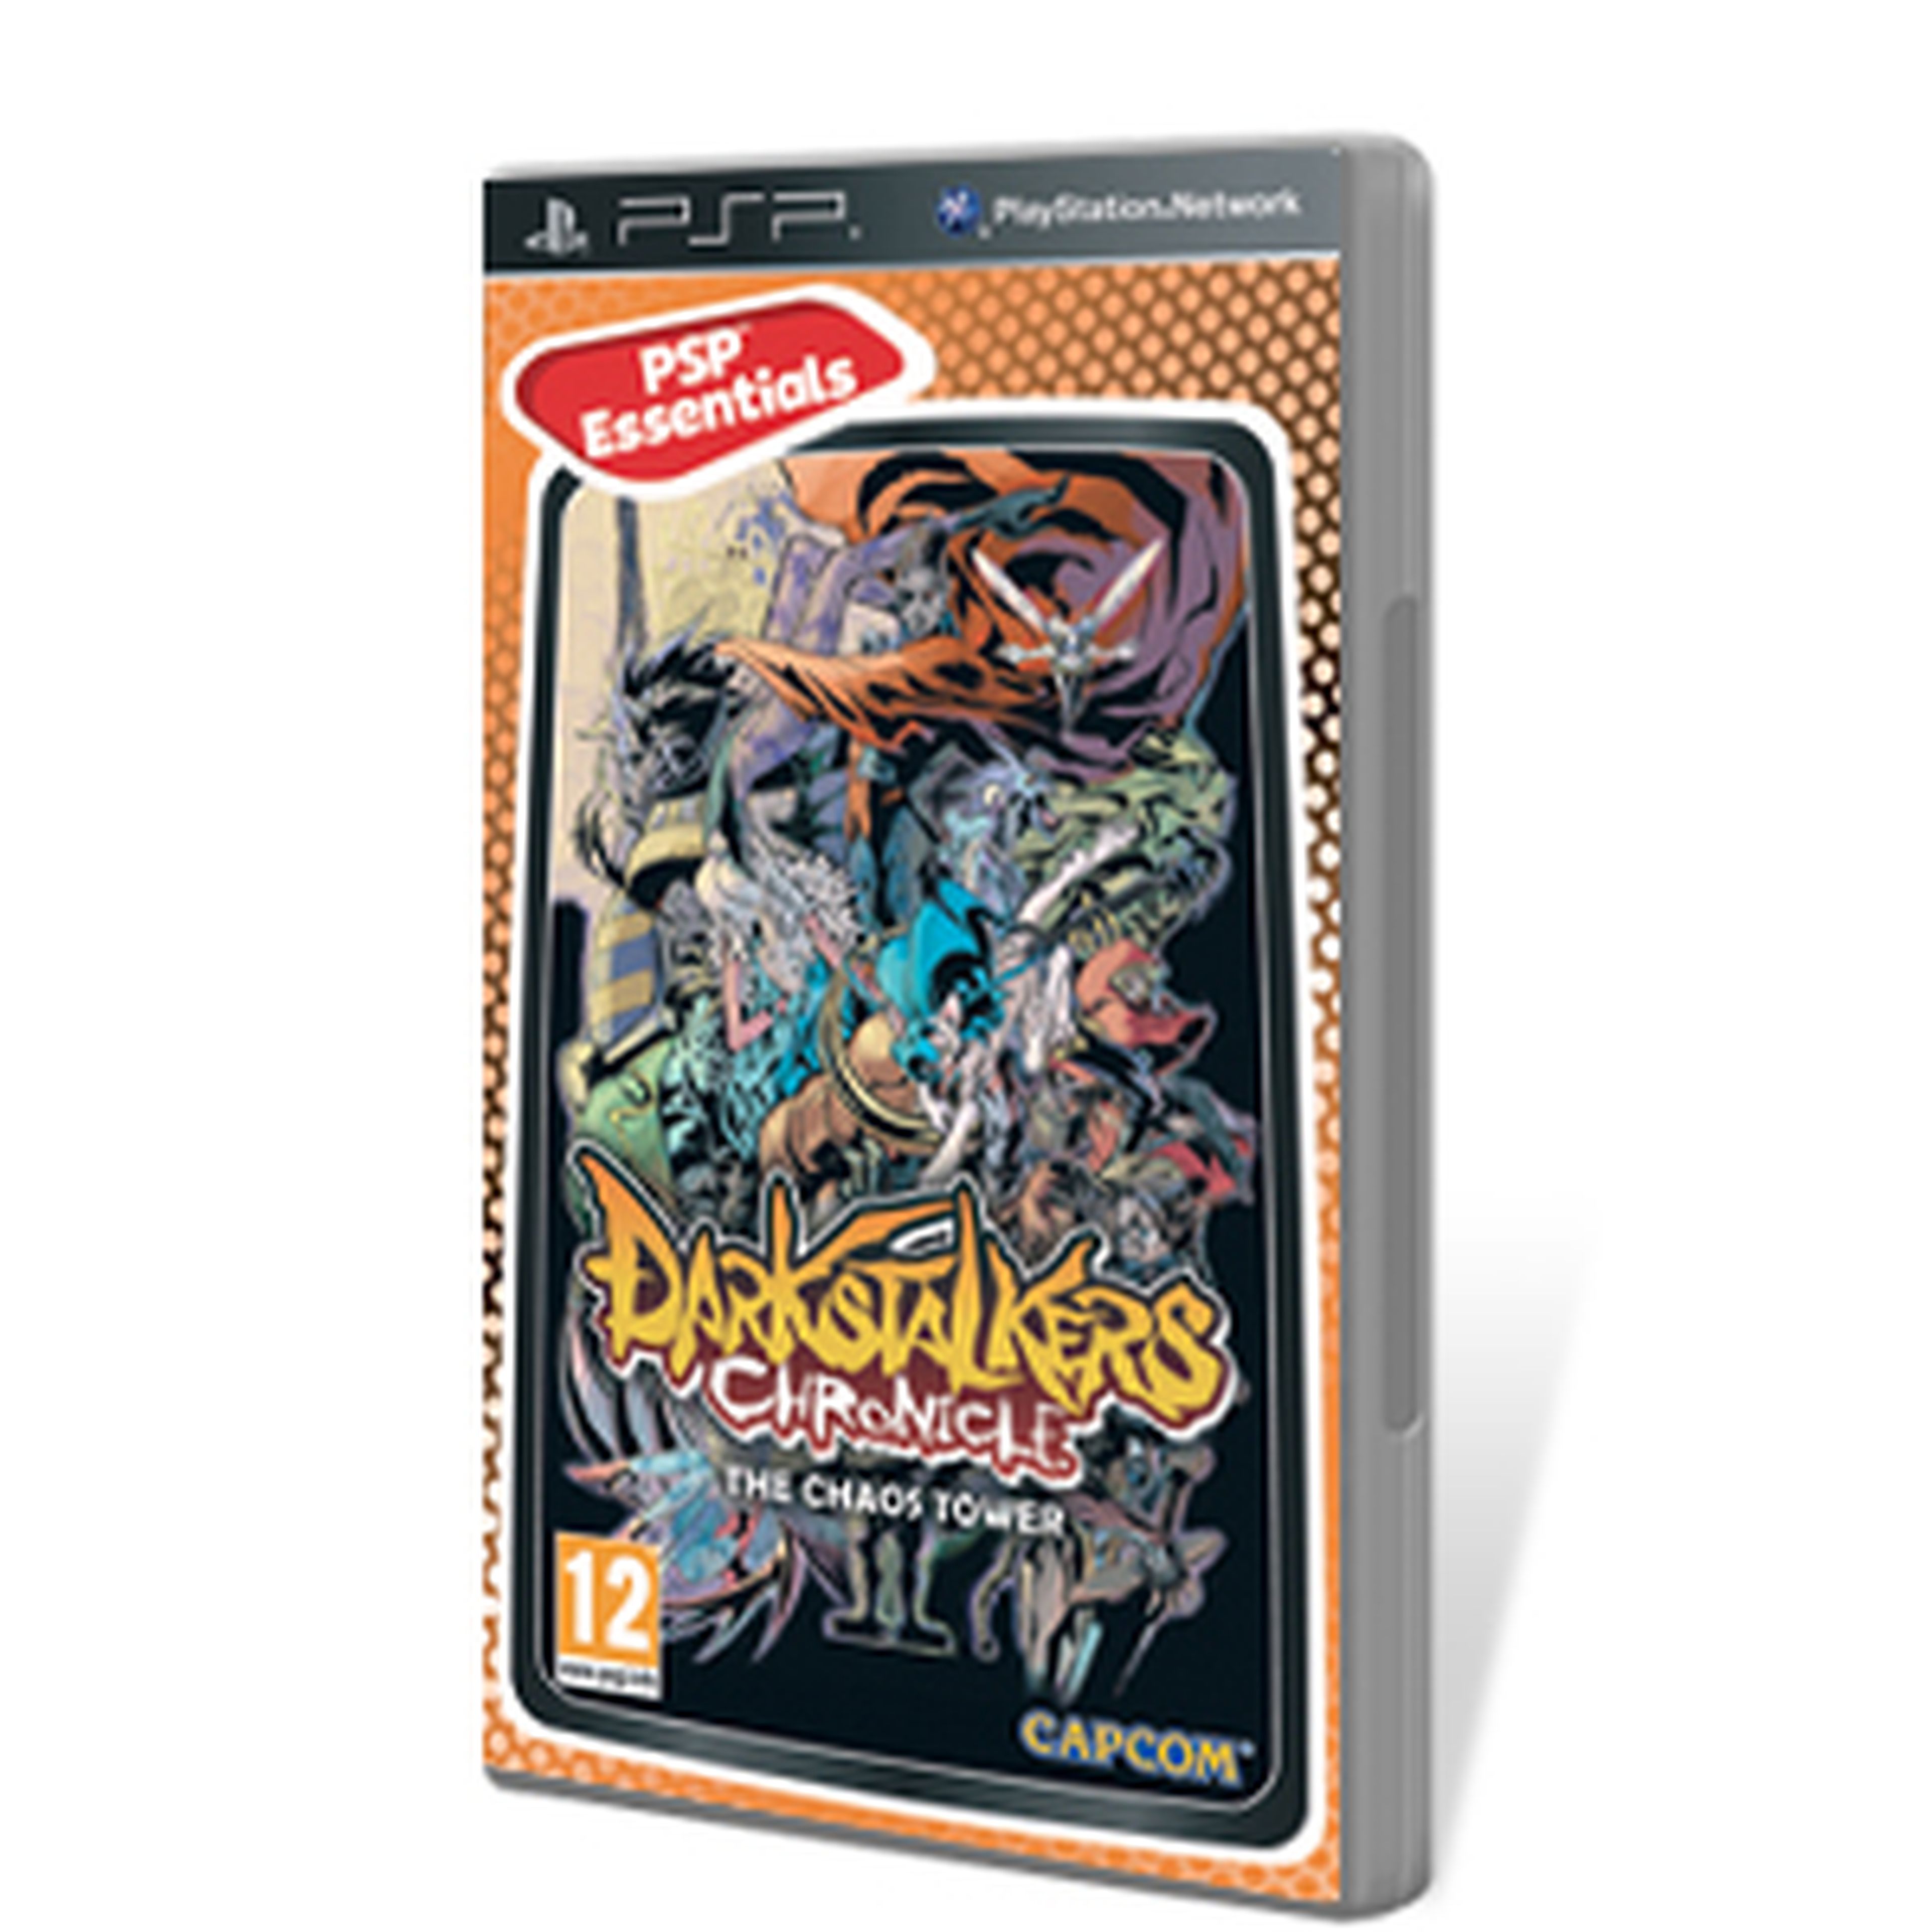 Darkstalkers Chronicle para PSP